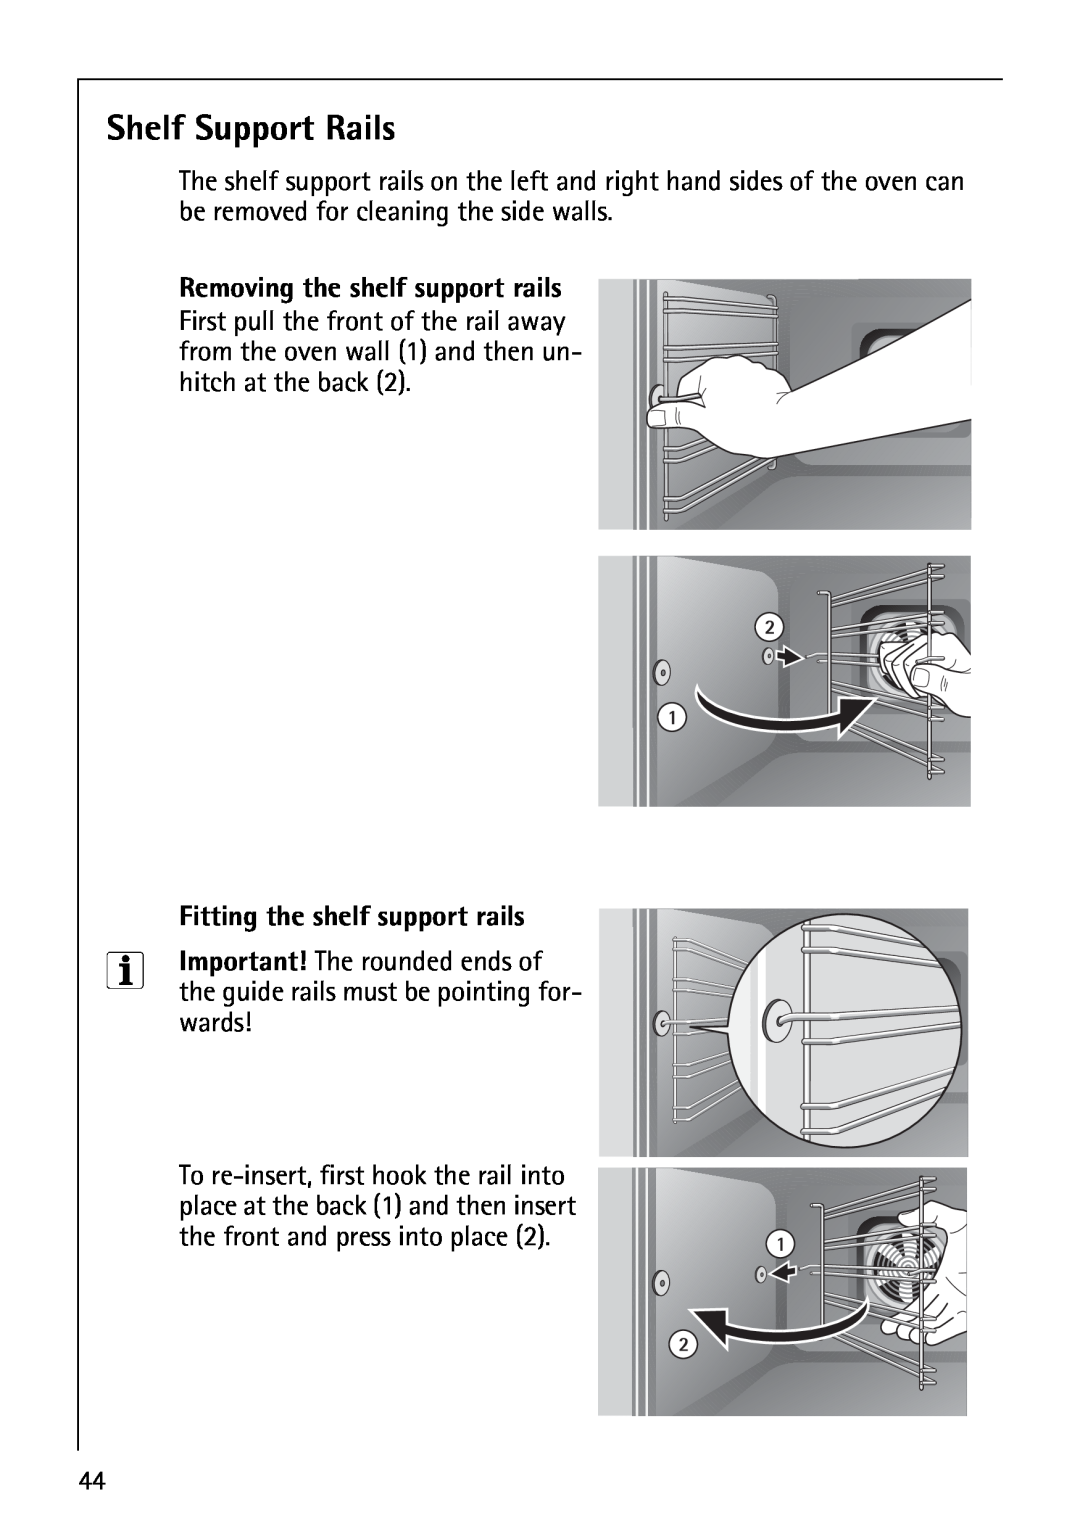 AEG B4130-1 operating instructions Shelf Support Rails, Removing the shelf support rails, Fitting the shelf support rails 